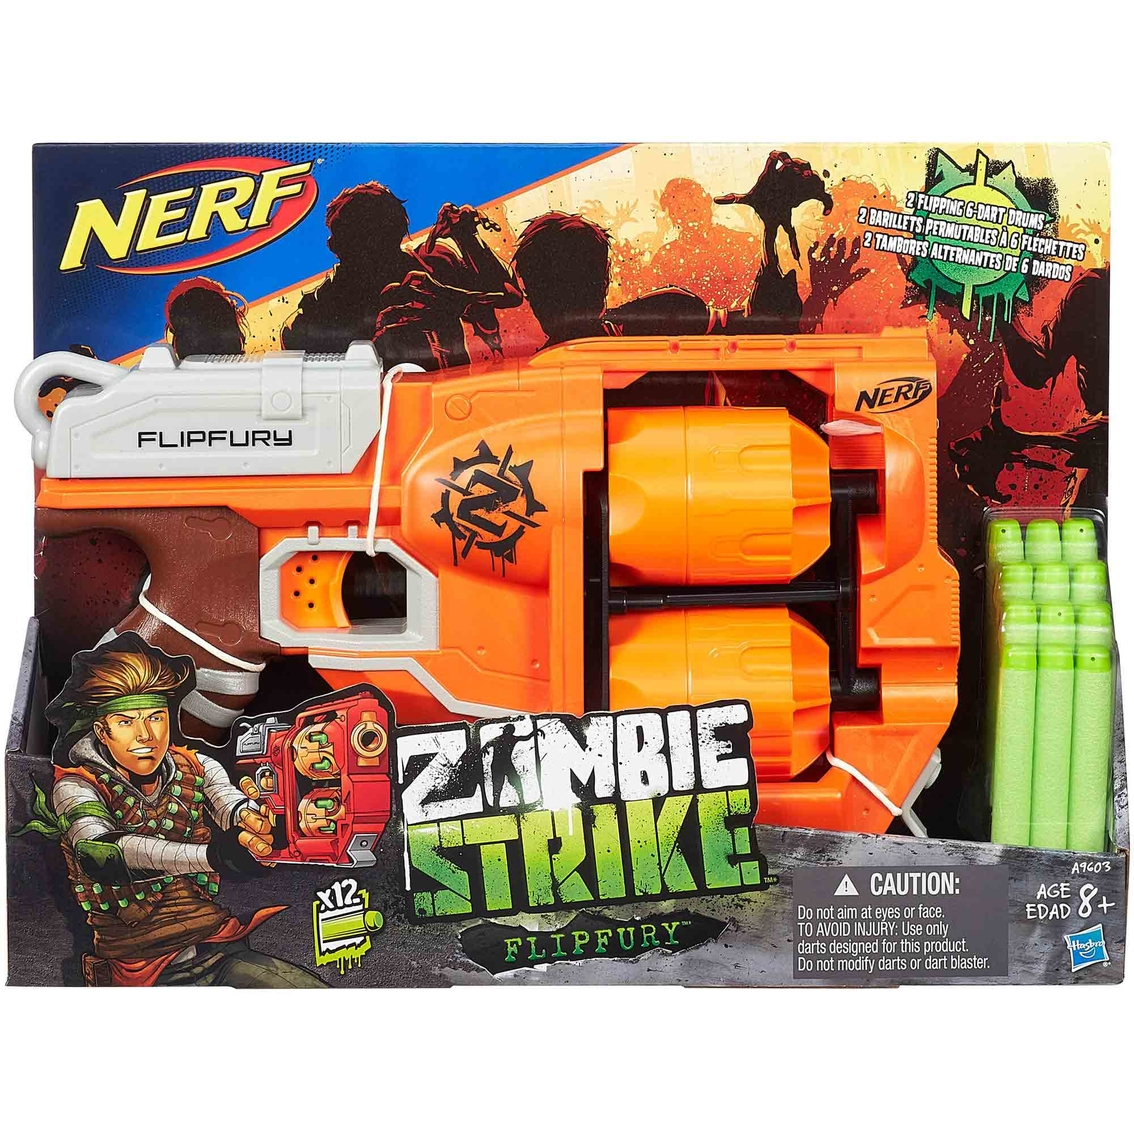 A9603 Nerf Zombie Strike Flipfury Blaster for sale online 